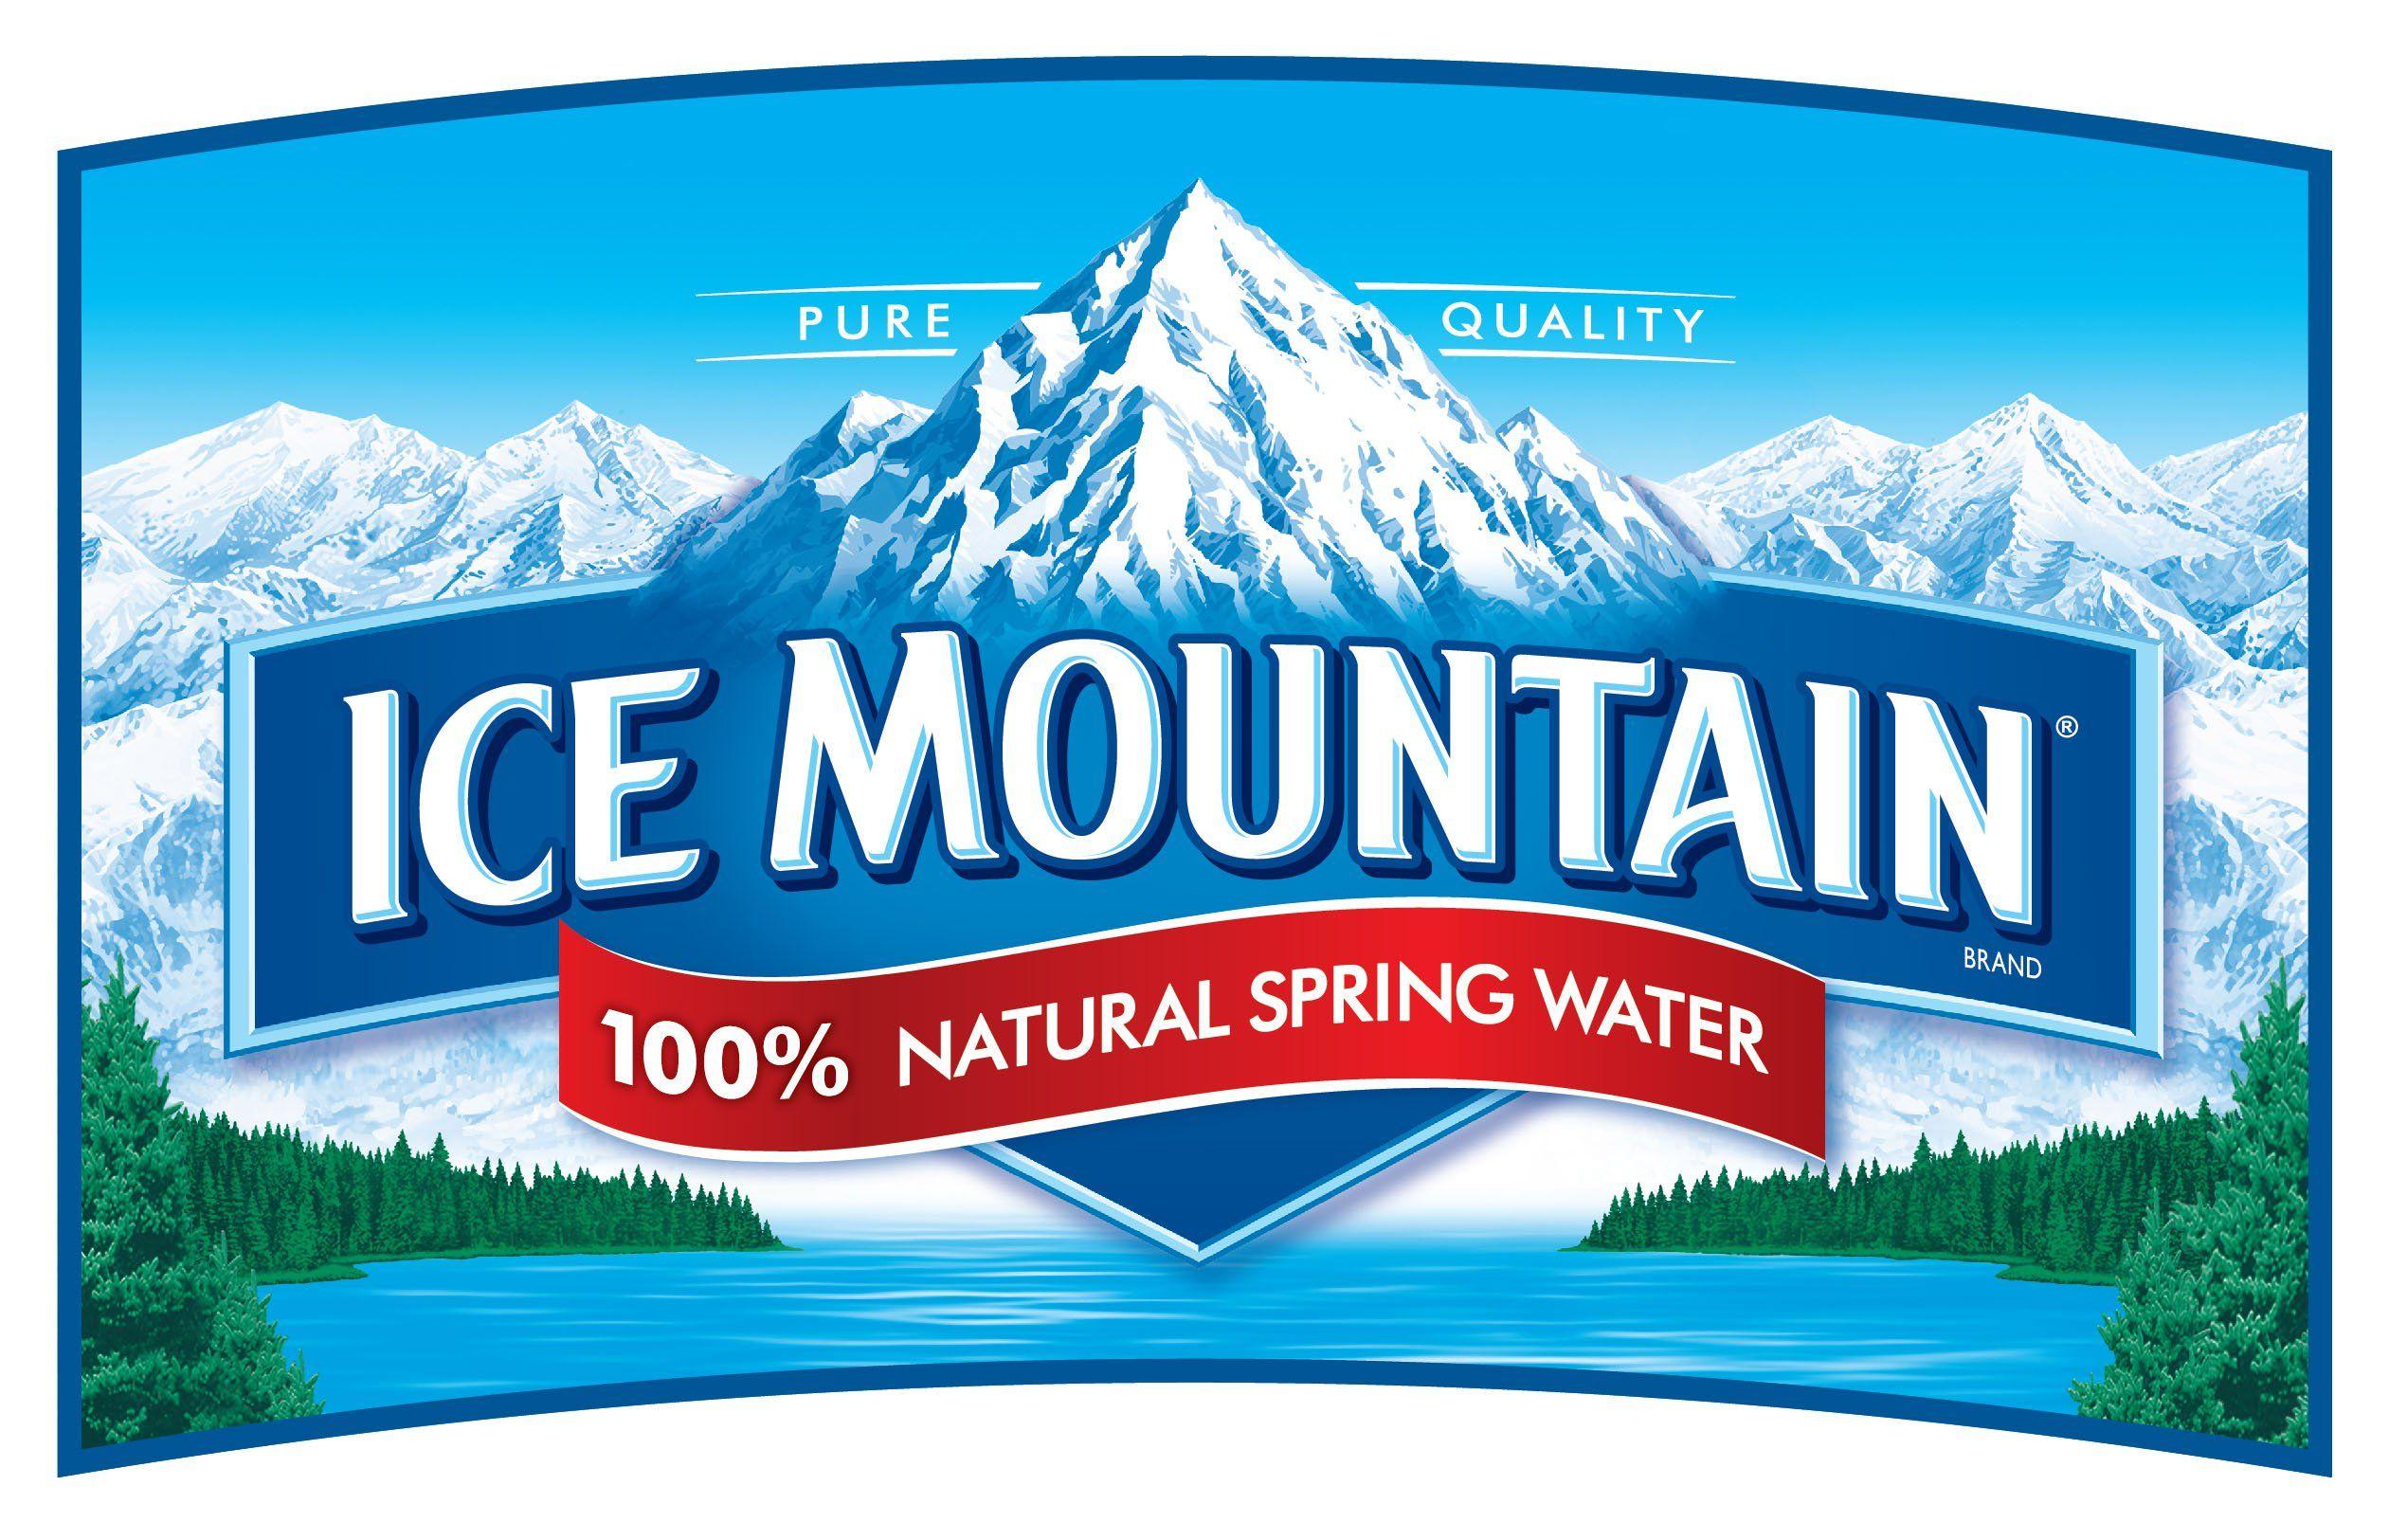 Ice Mountain Logo - Logos